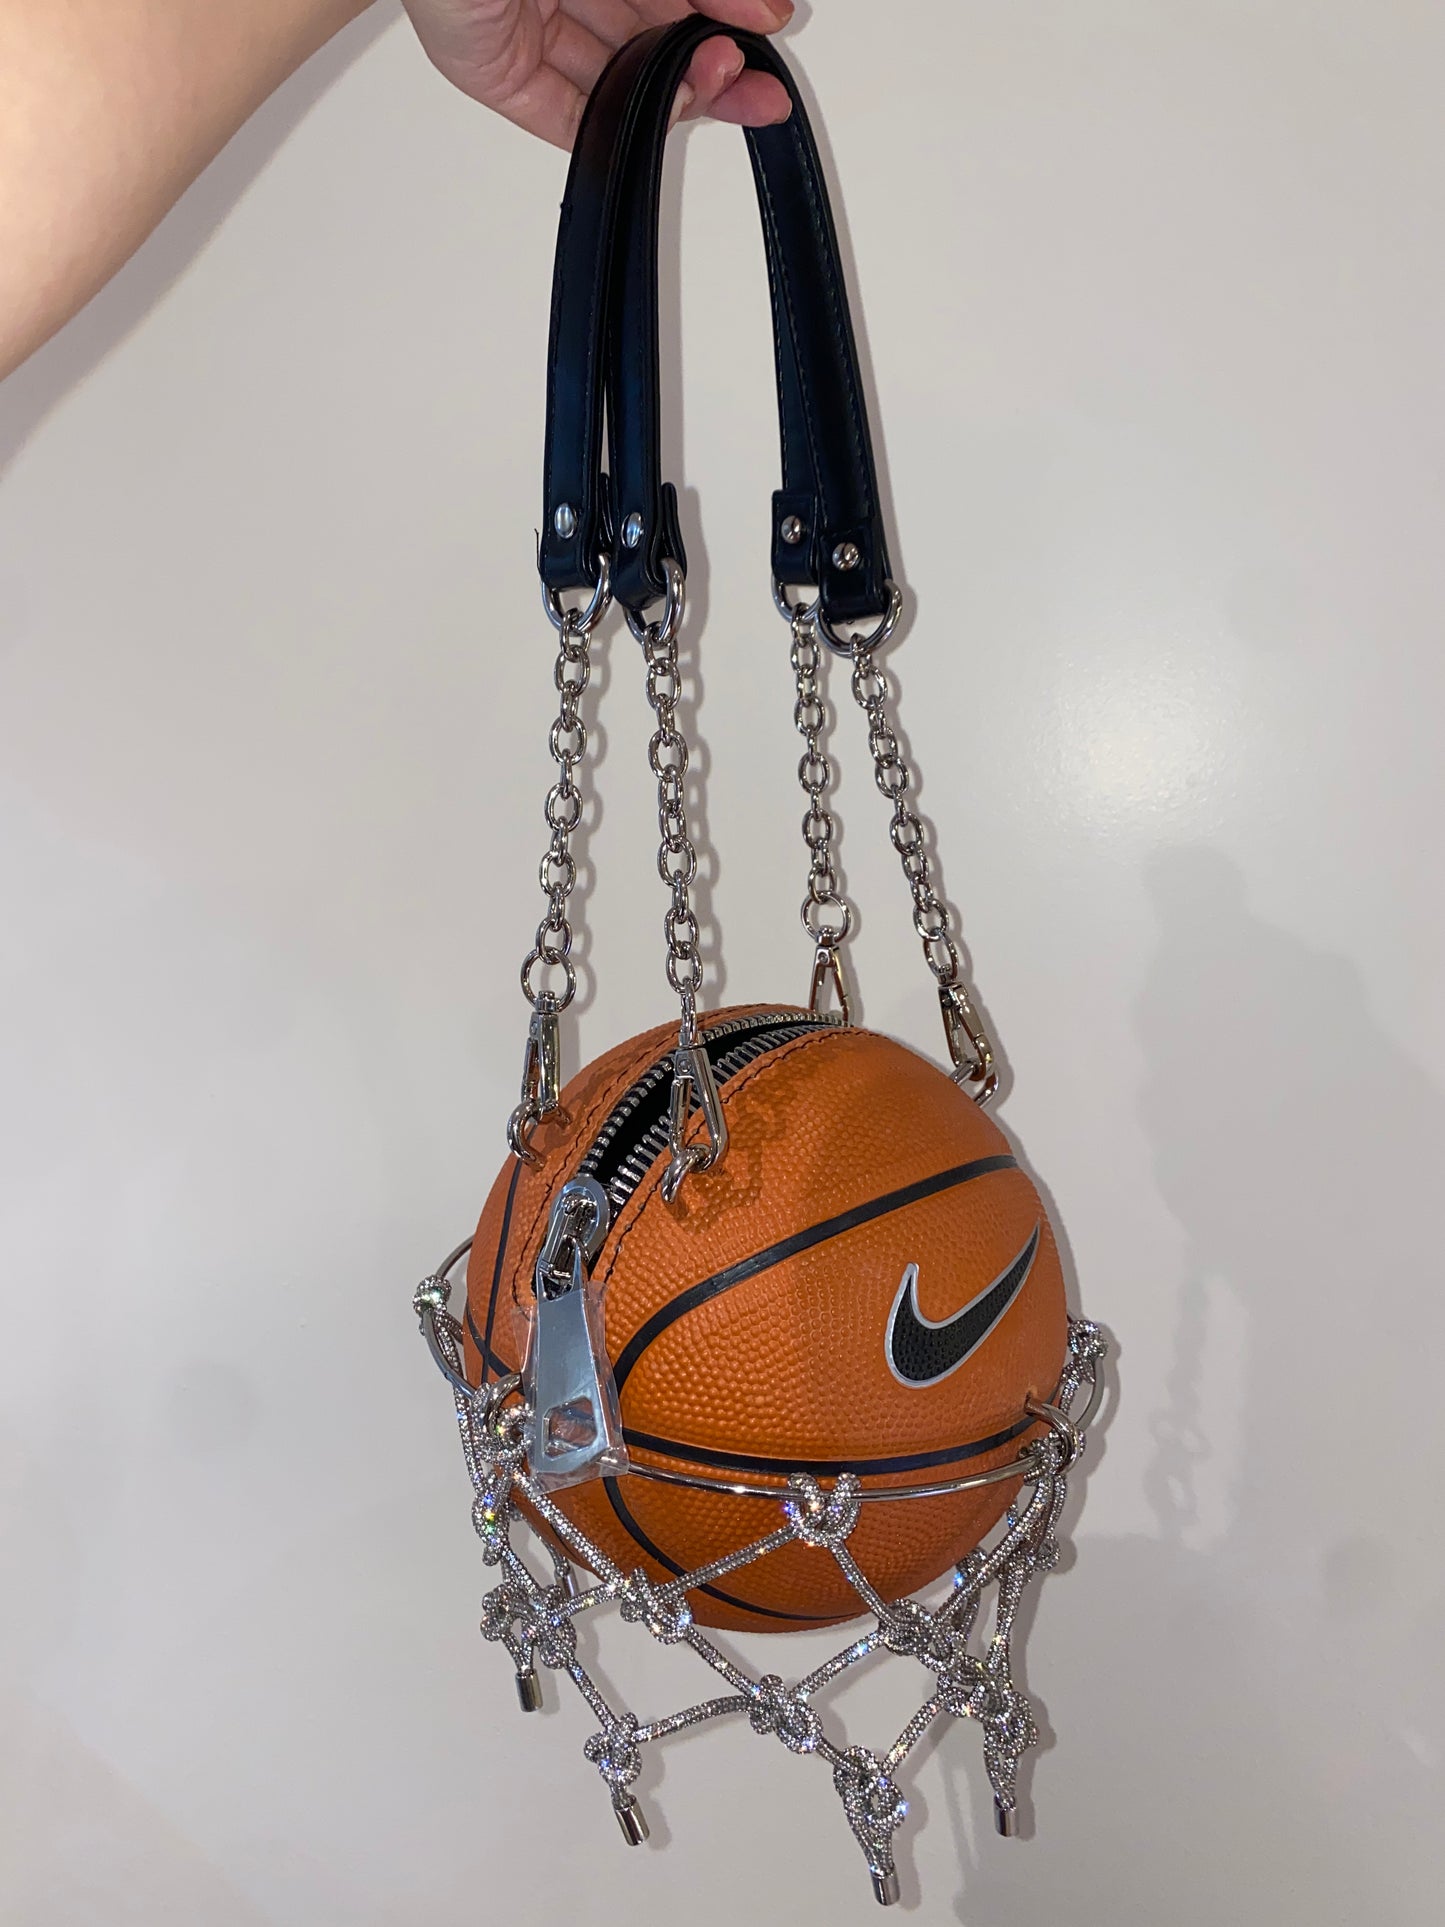 Exclusive Hand-Made NIKE 3.0 Basketball purse (ORANGE)